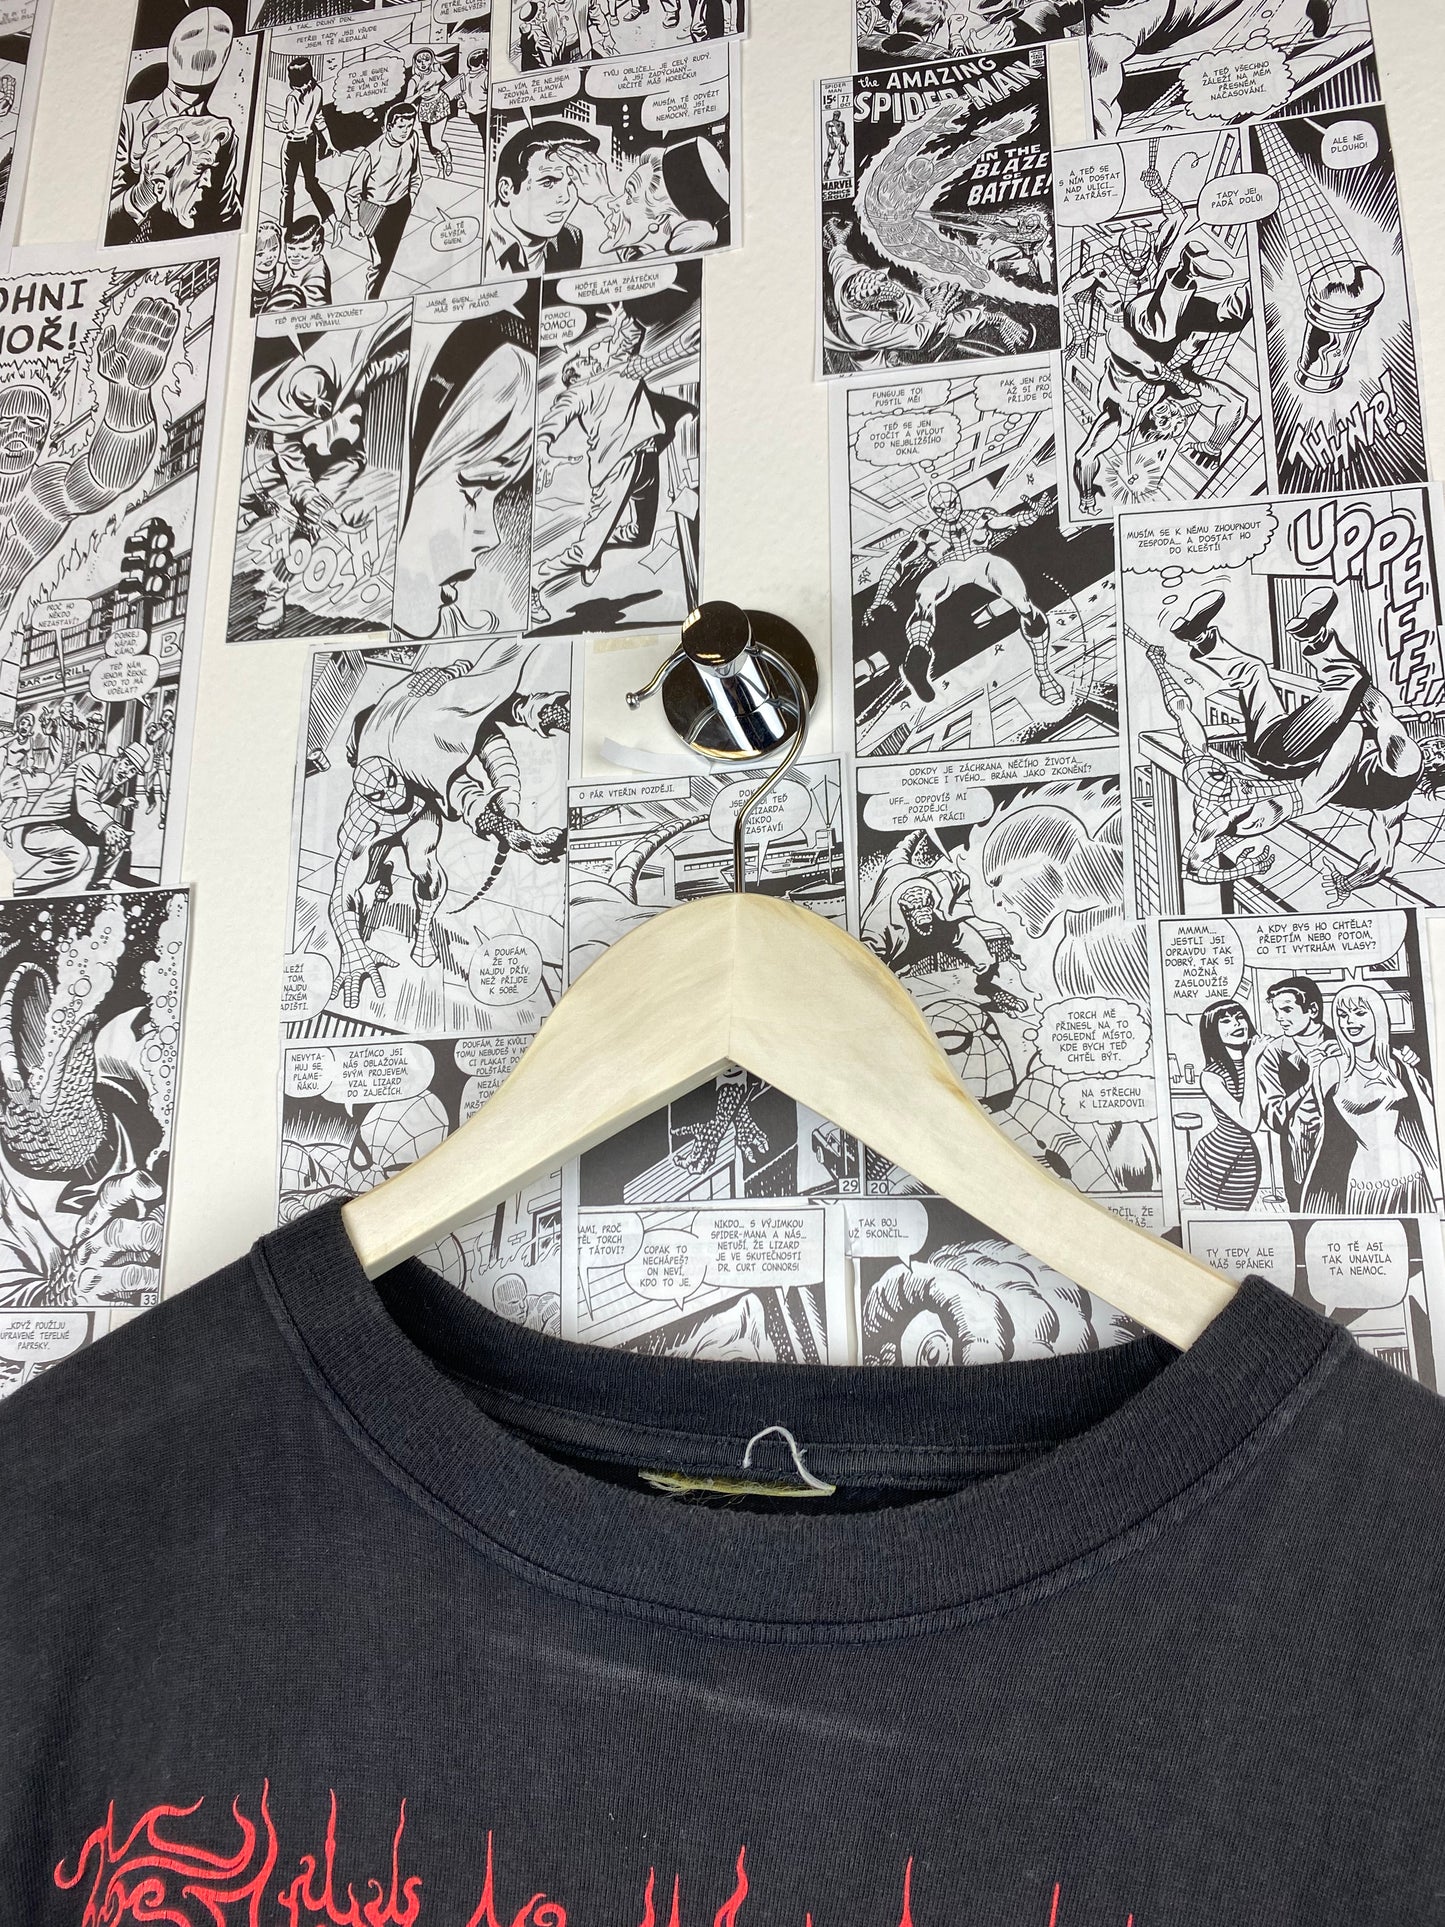 Vintage Cradle of Filth “Black Goddess” 1996 Tank Top t-shirt - size XL